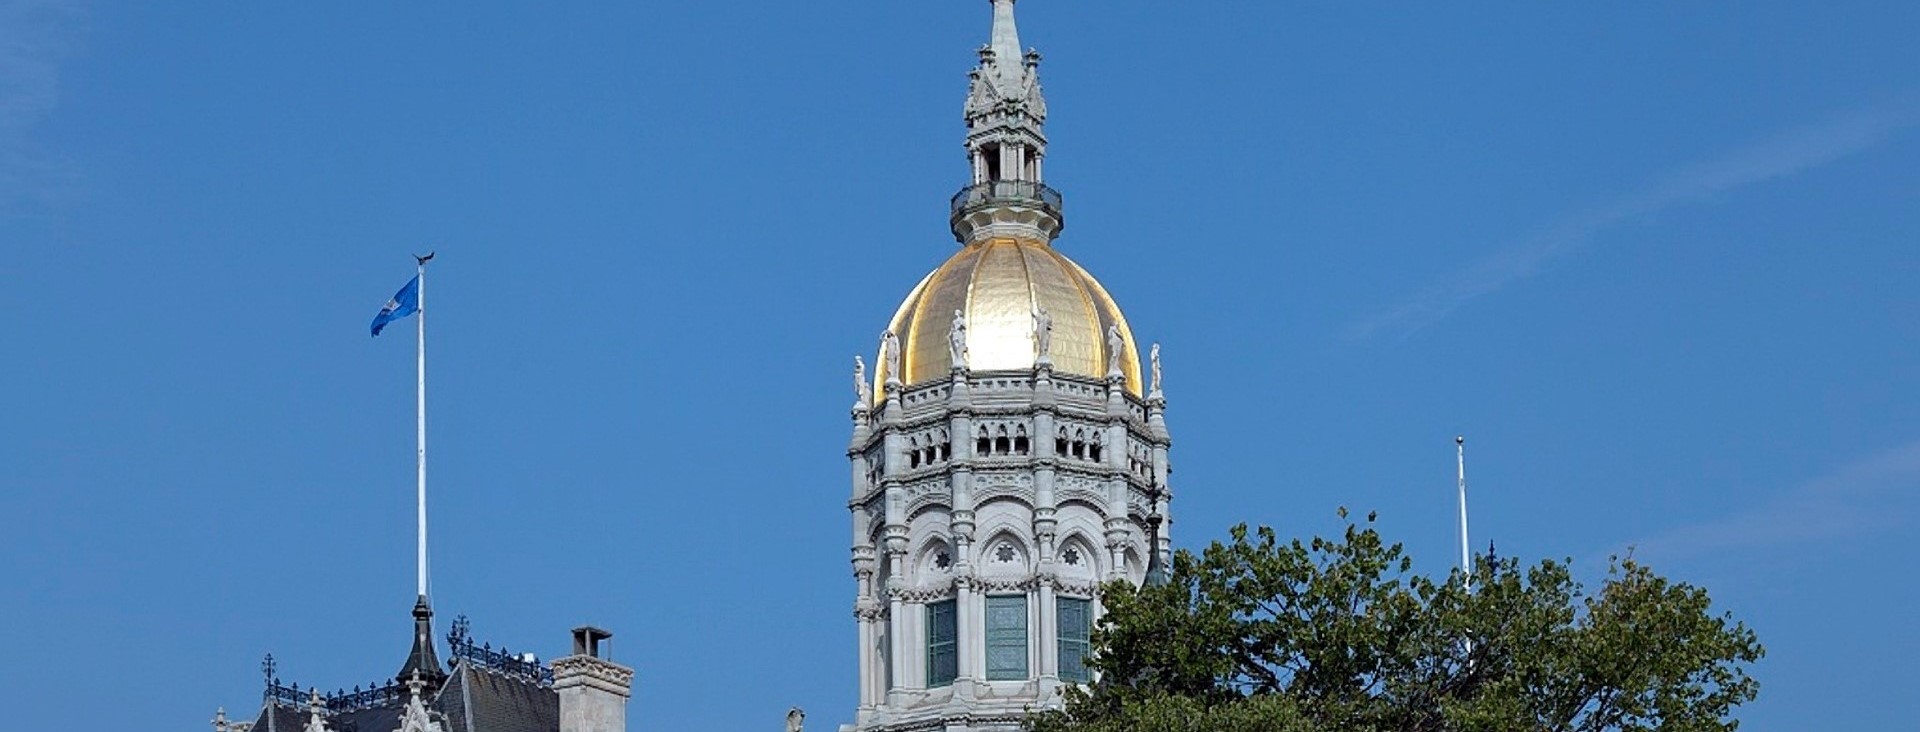 Capitol building in Hartford